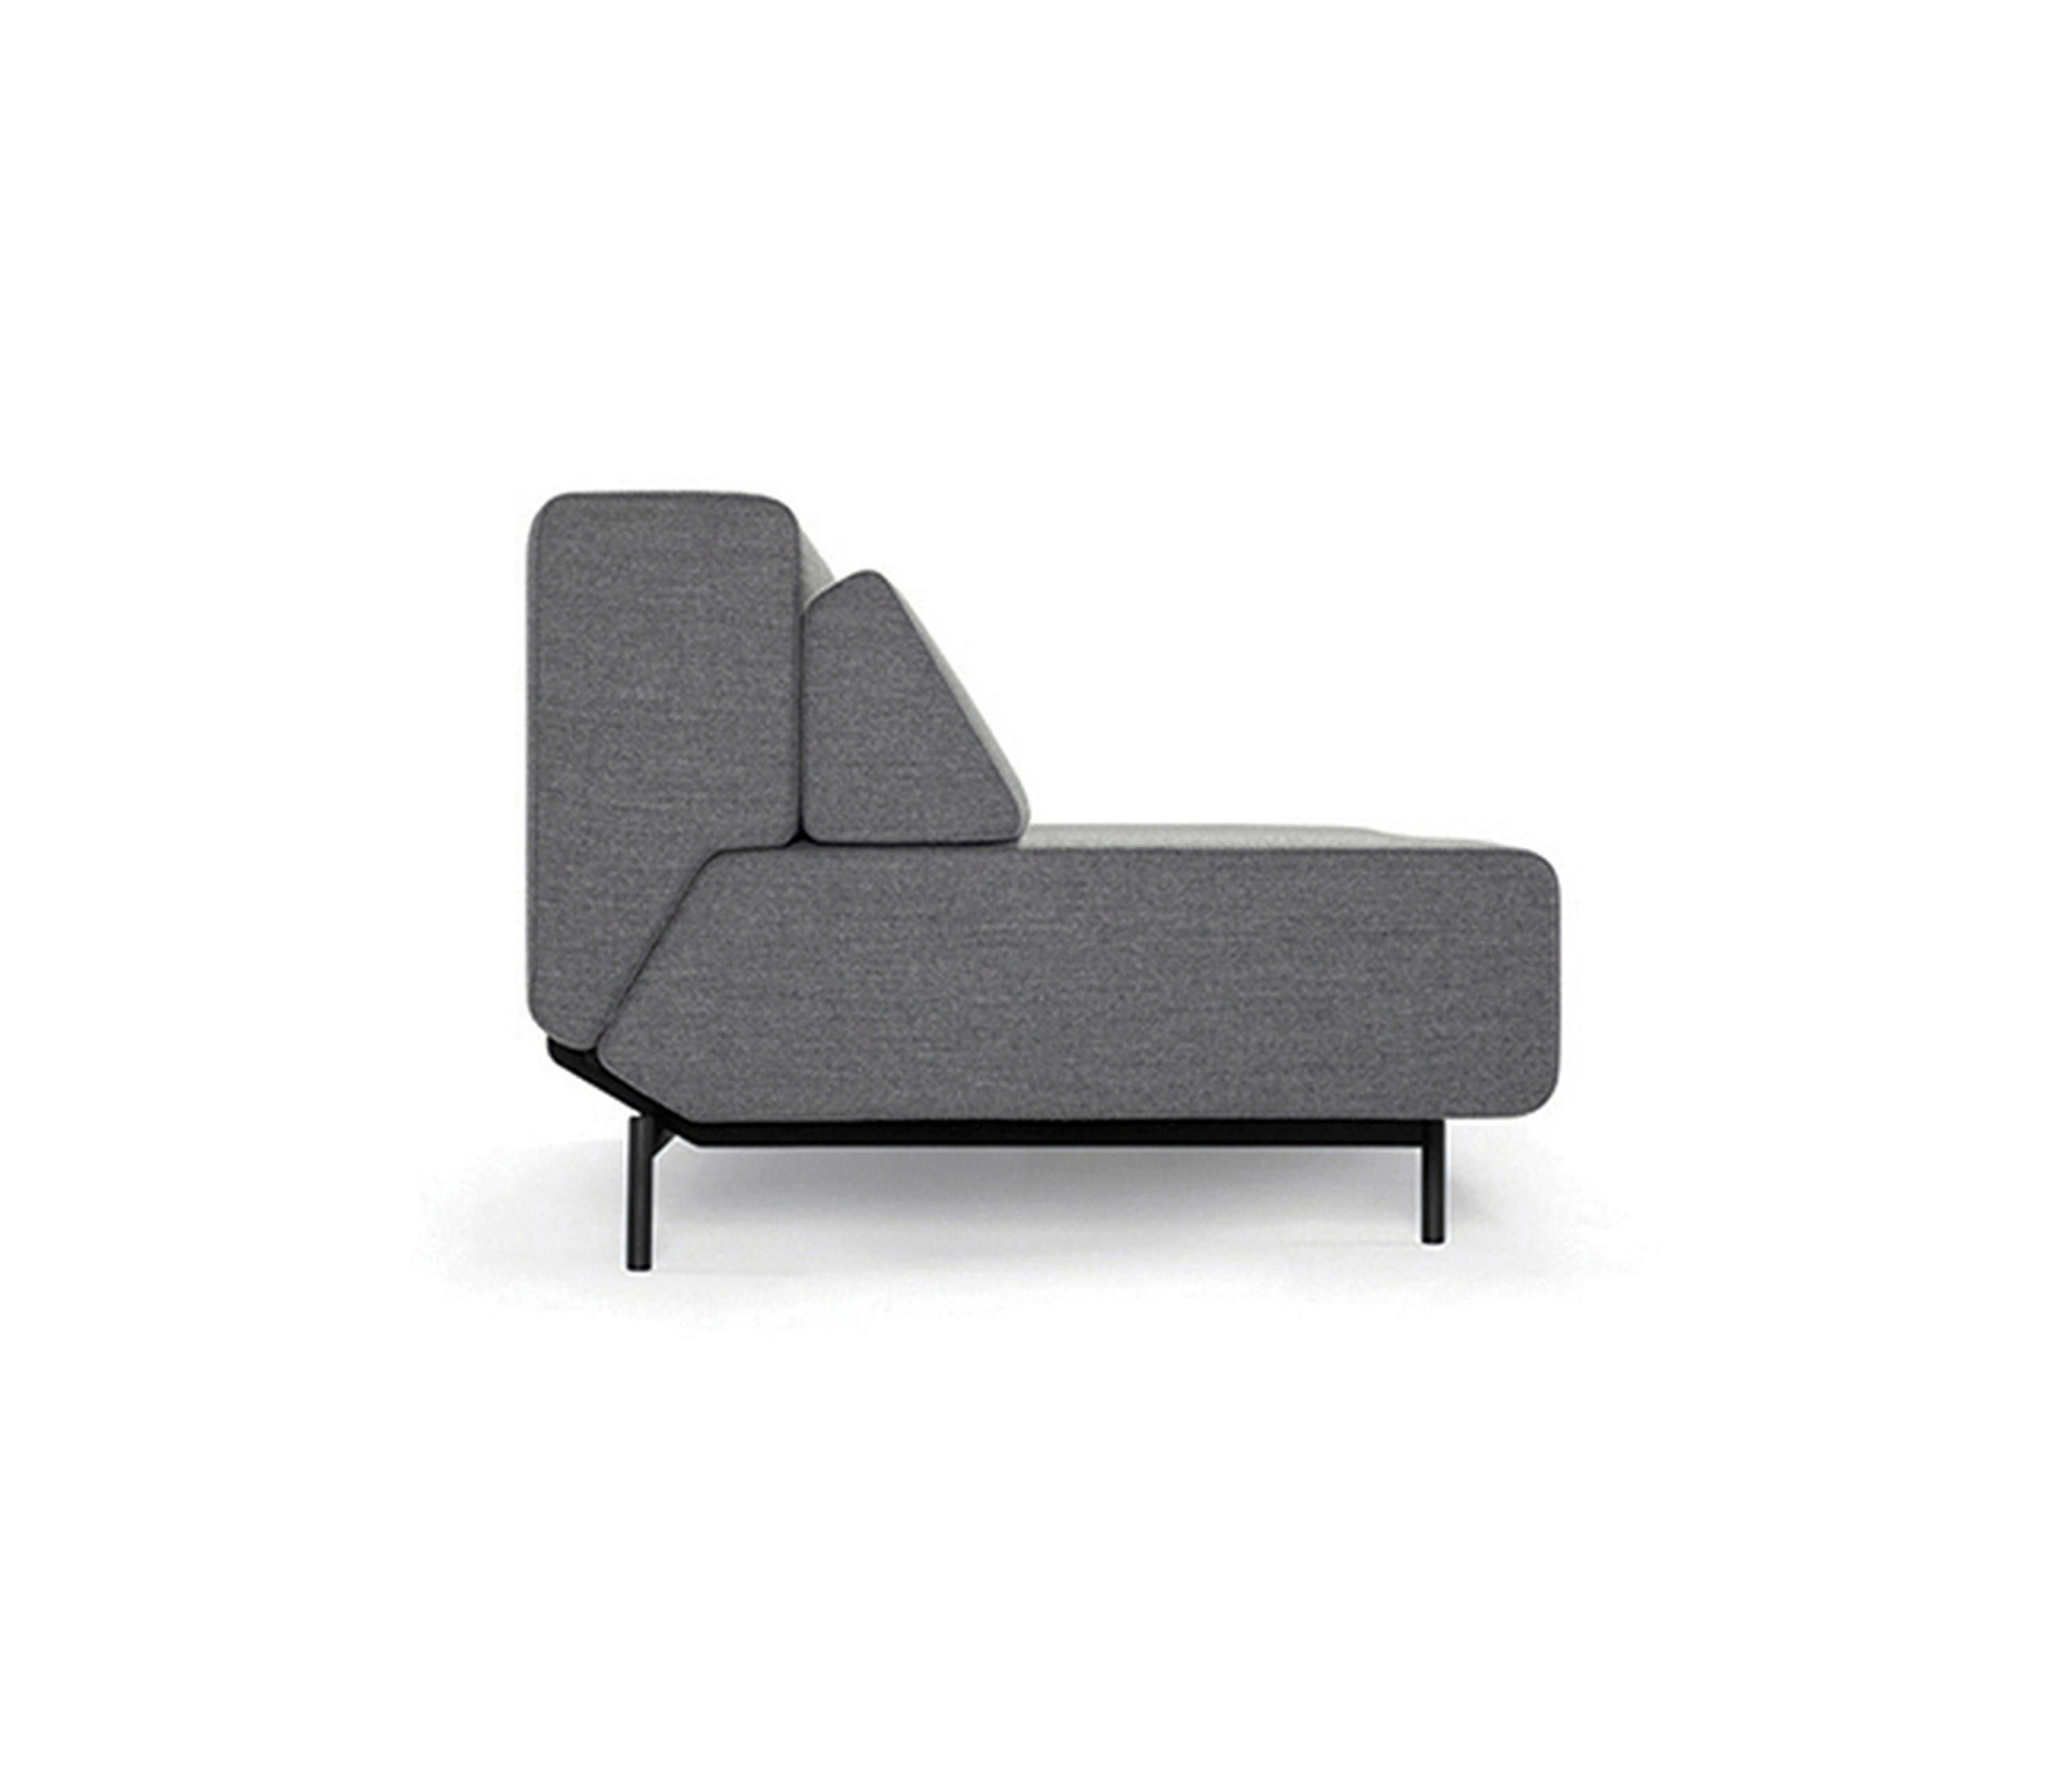 Pil-low sofa bed & designer furniture | Architonic